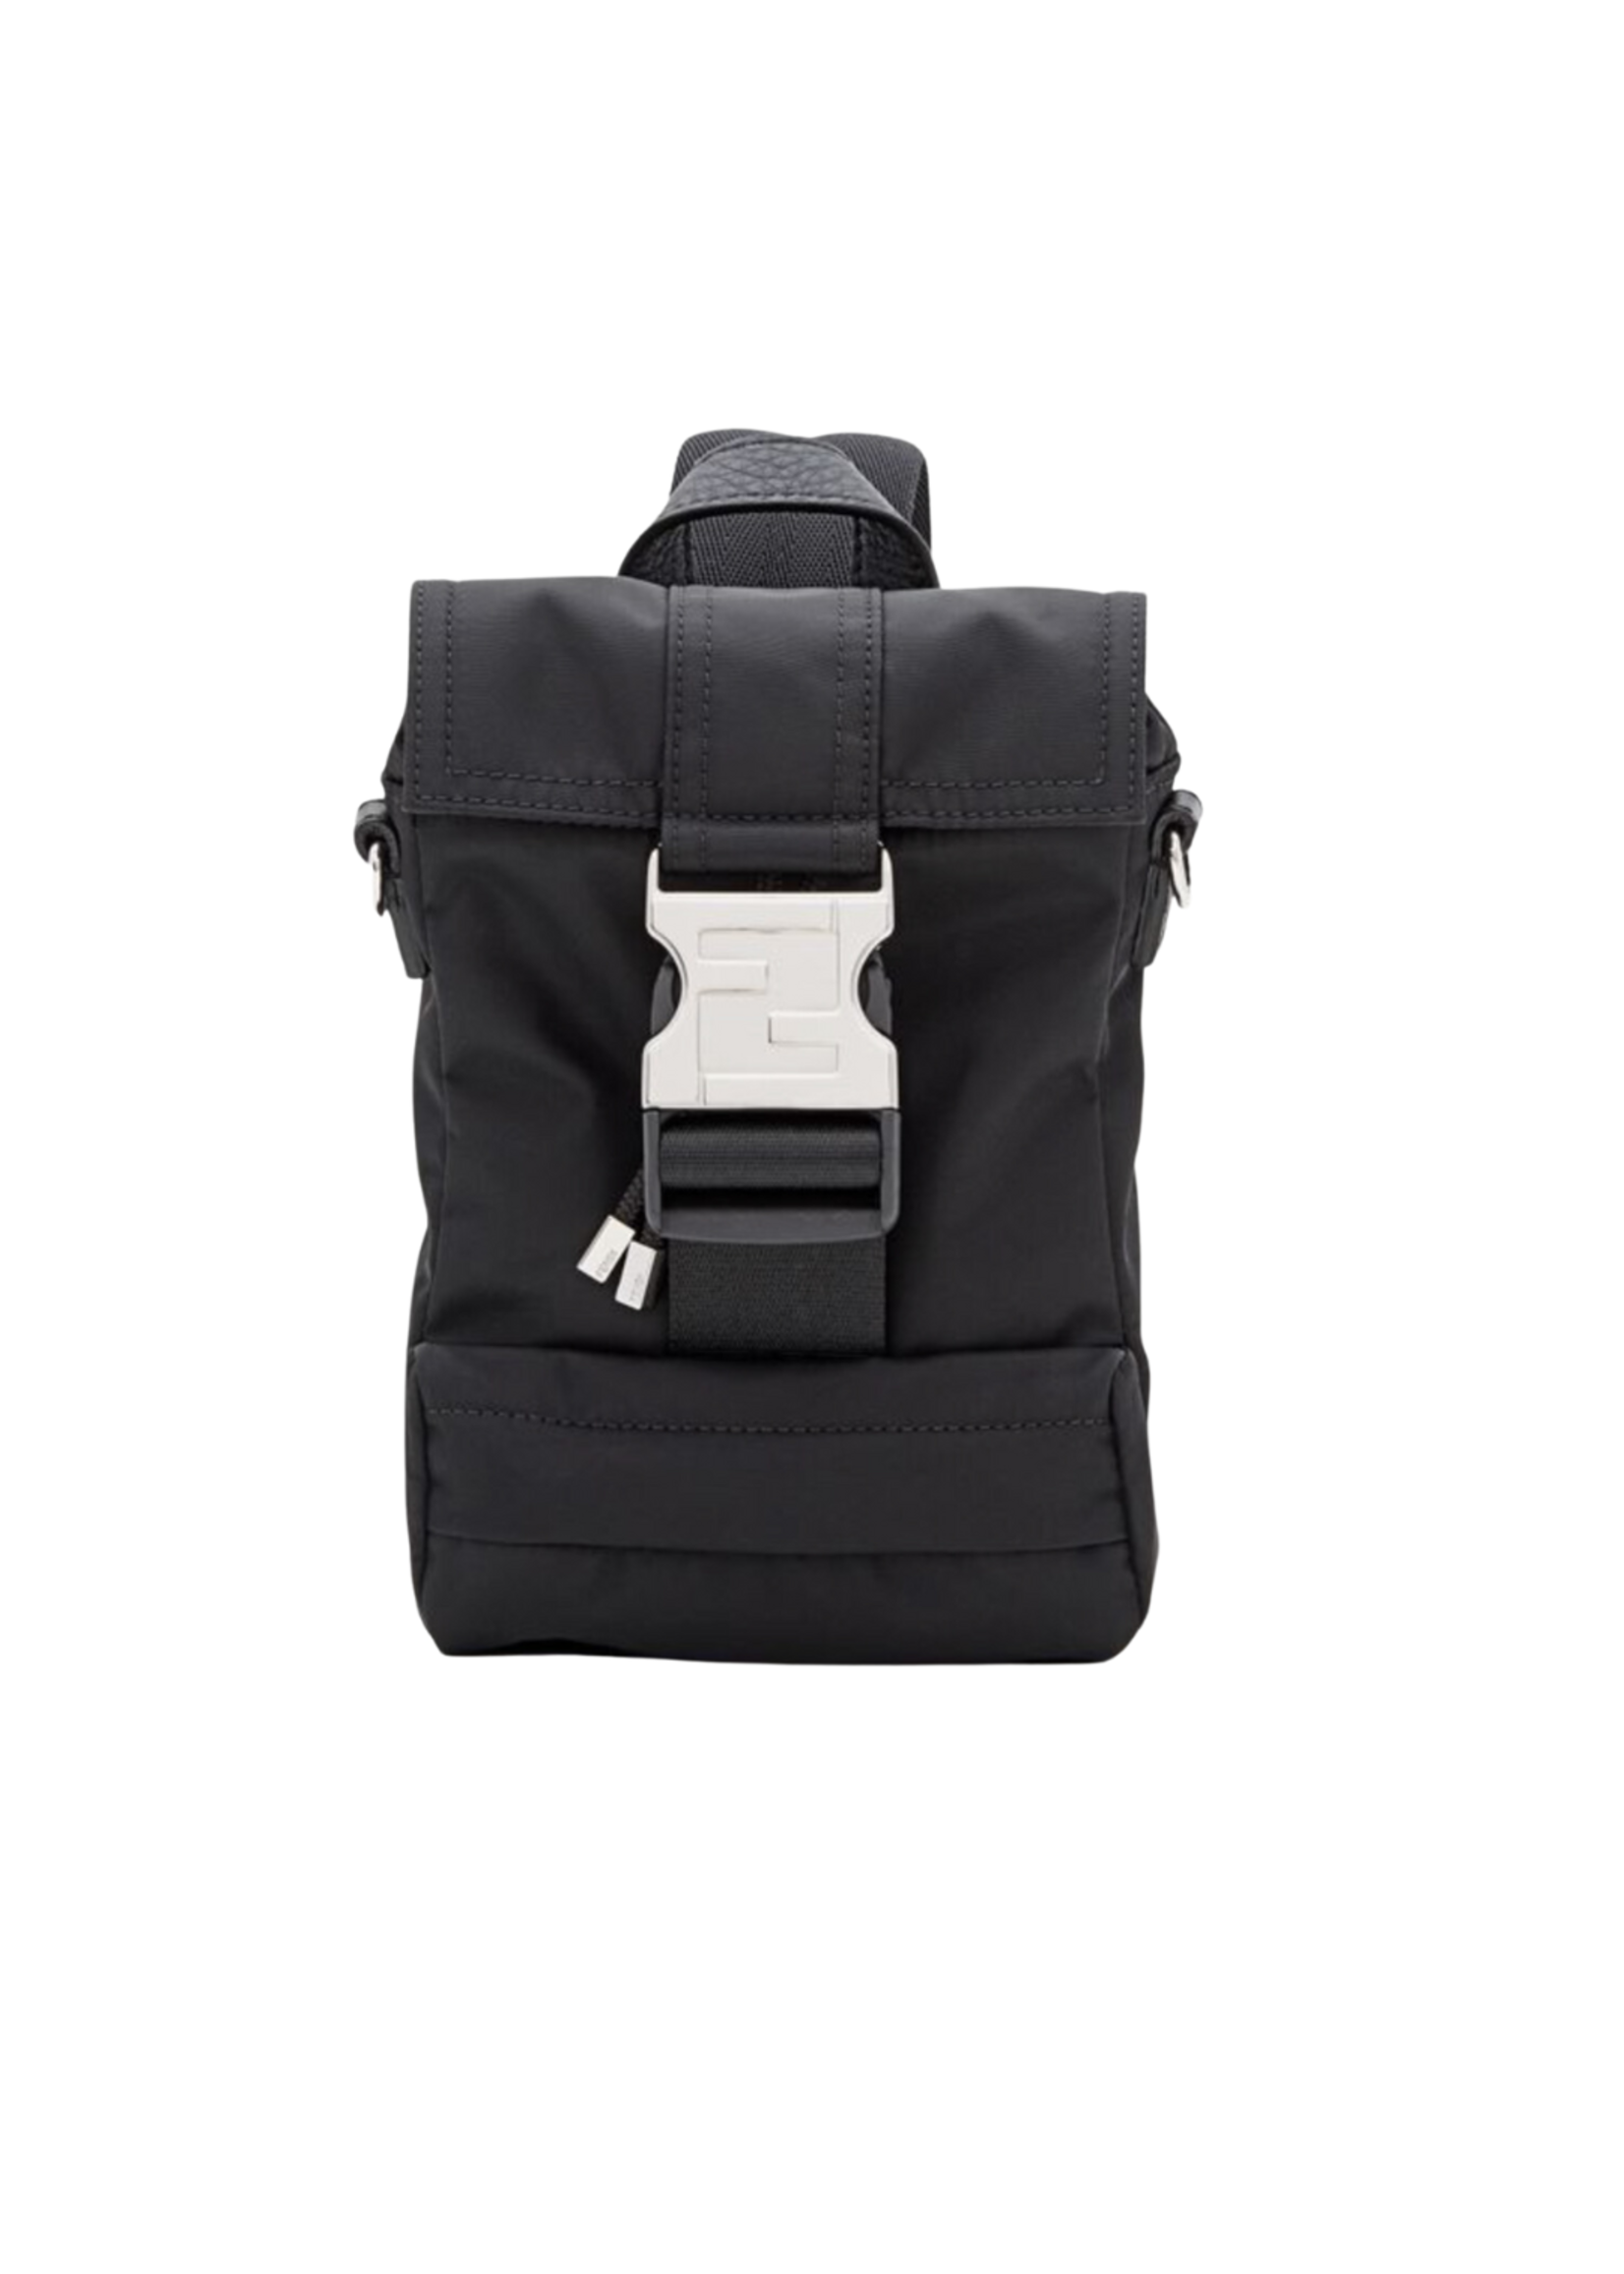 Fendi Black Fendiness Mini Backpack - Couture Pop-Ups